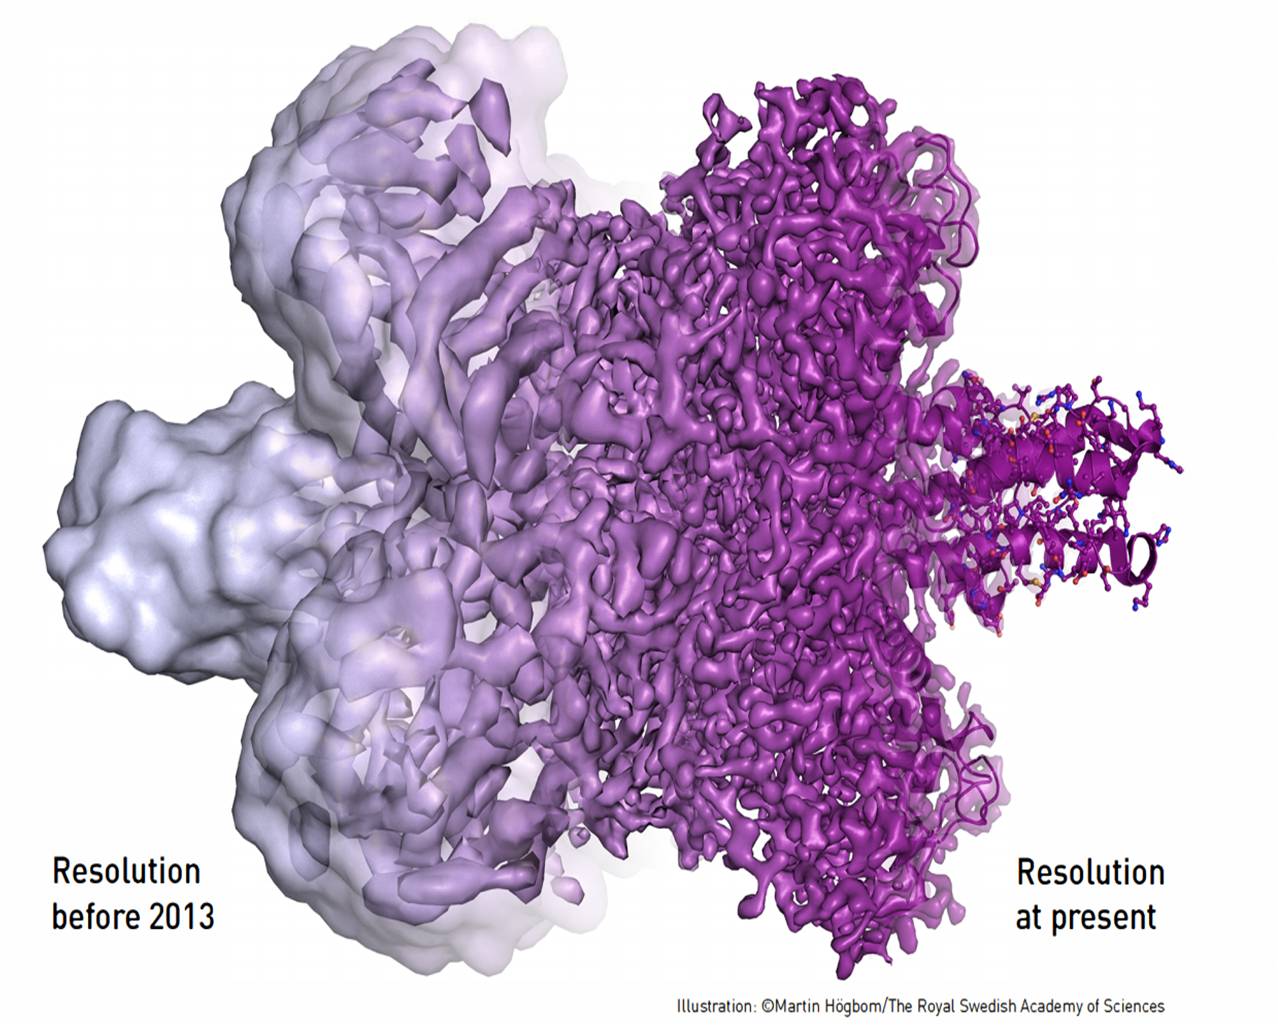 Imaging Biomolecular movement